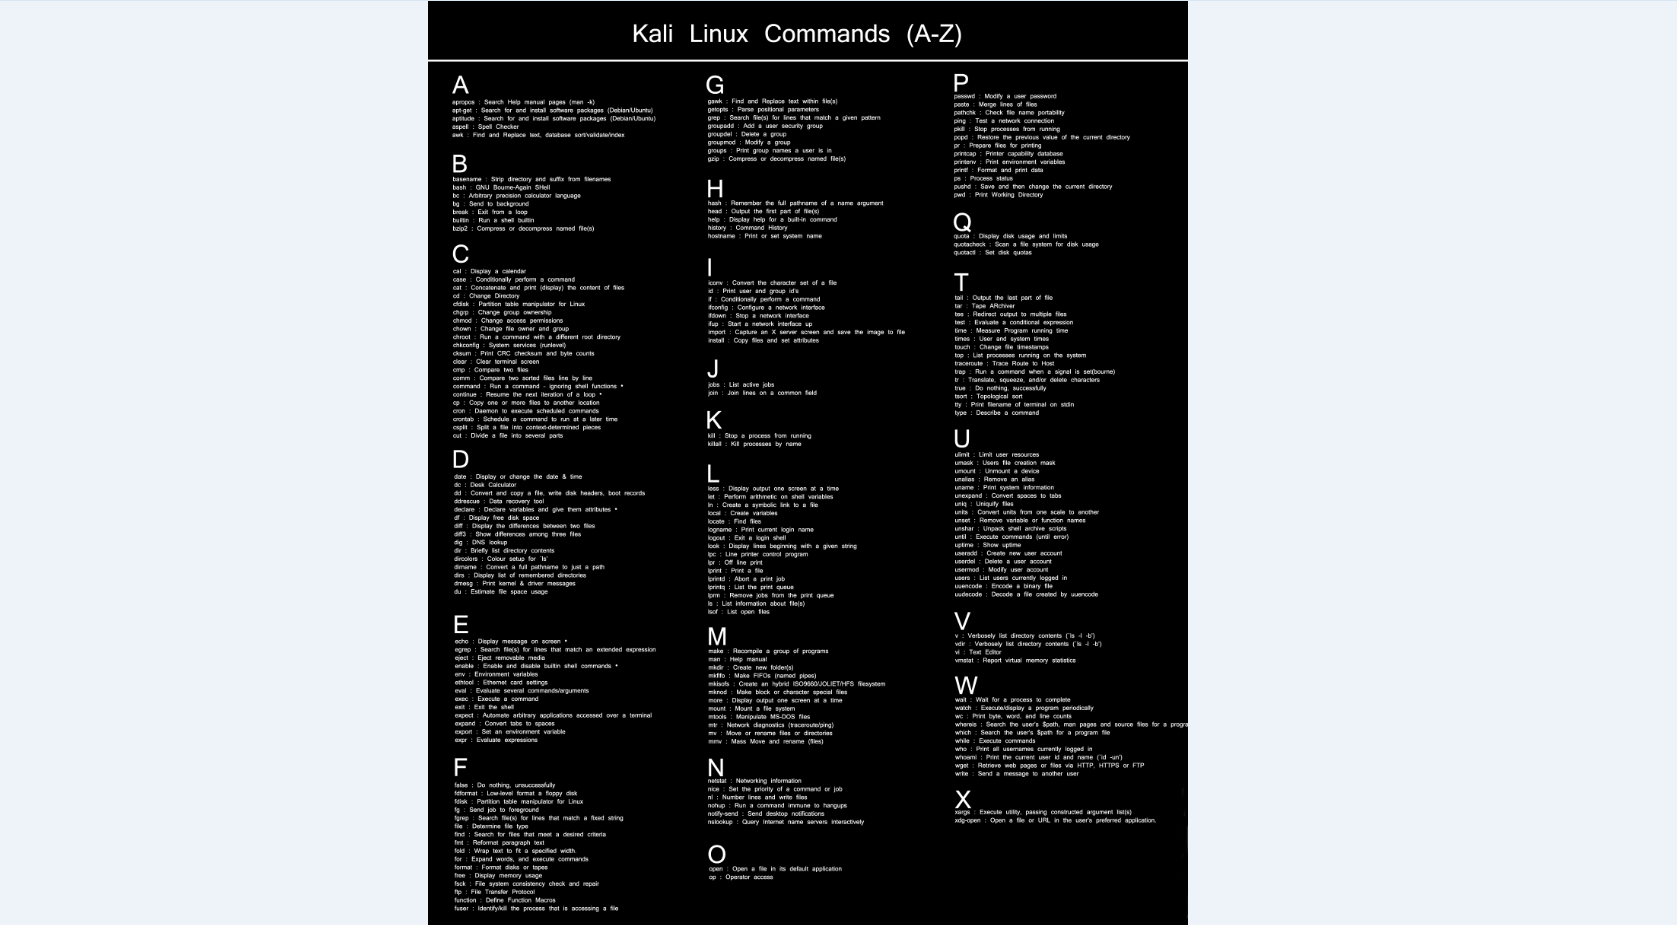 Linux Commands Cheat Sheet